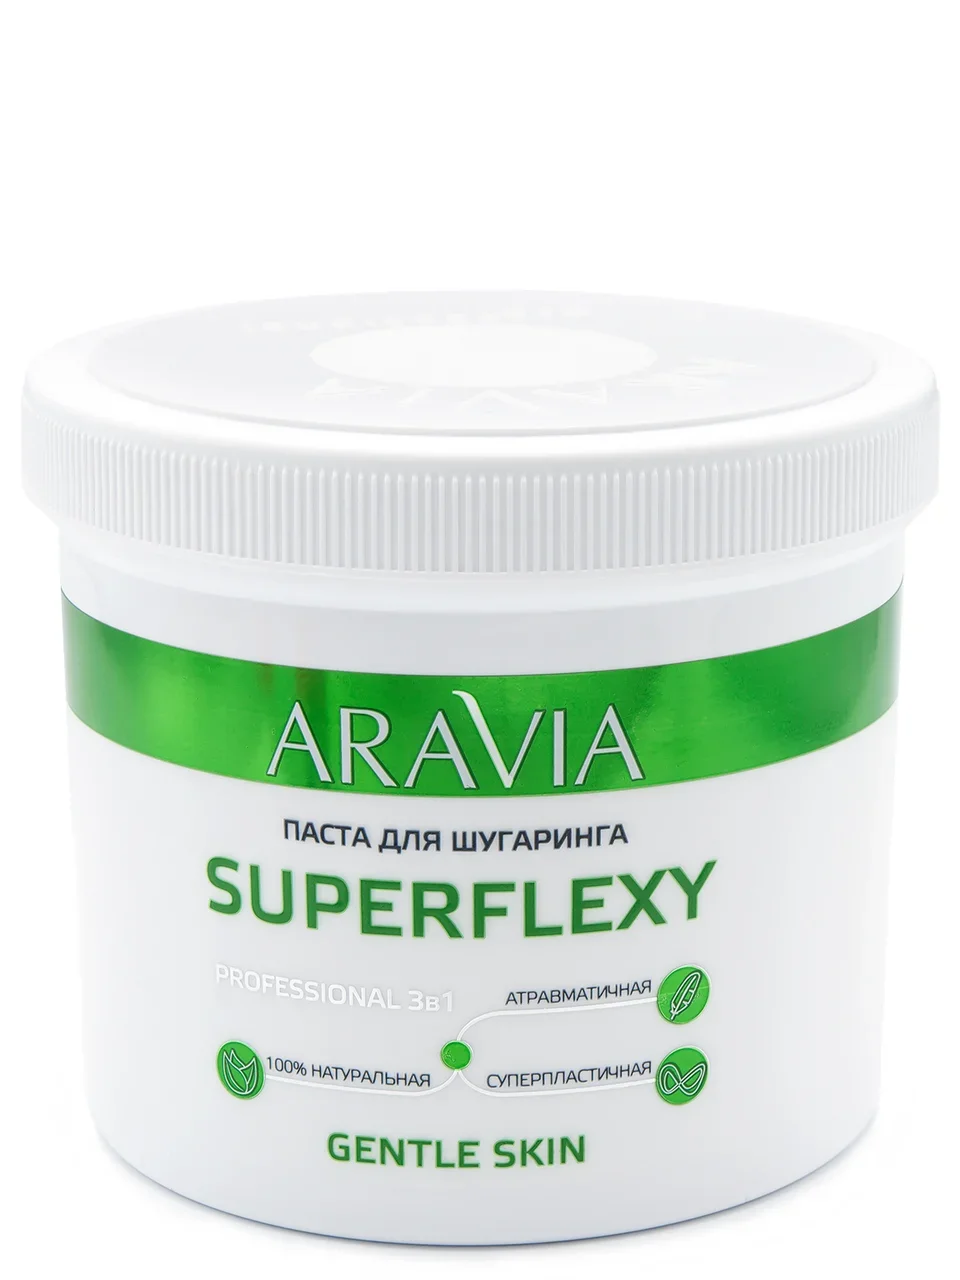 Паста для шугаринга Aravia Professional Superflexy Gentle Skin 750 г aravia паста для шугаринга superflexy white cream 750 г